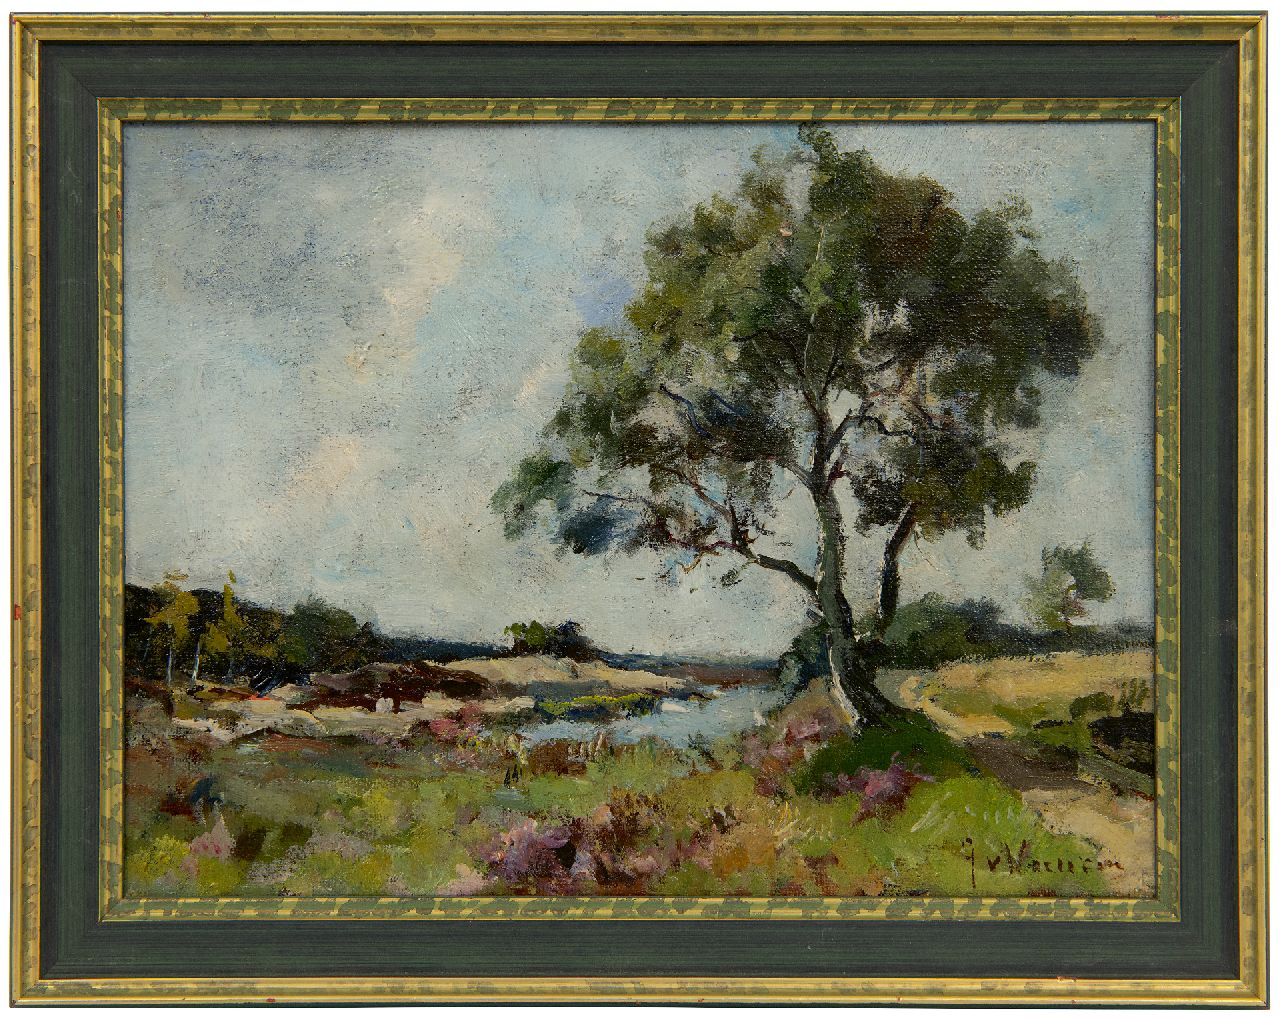 Vuuren J. van | Jan van Vuuren | Paintings offered for sale | Heather landscape, oil on canvas 19.2 x 25.4 cm, signed l.r.